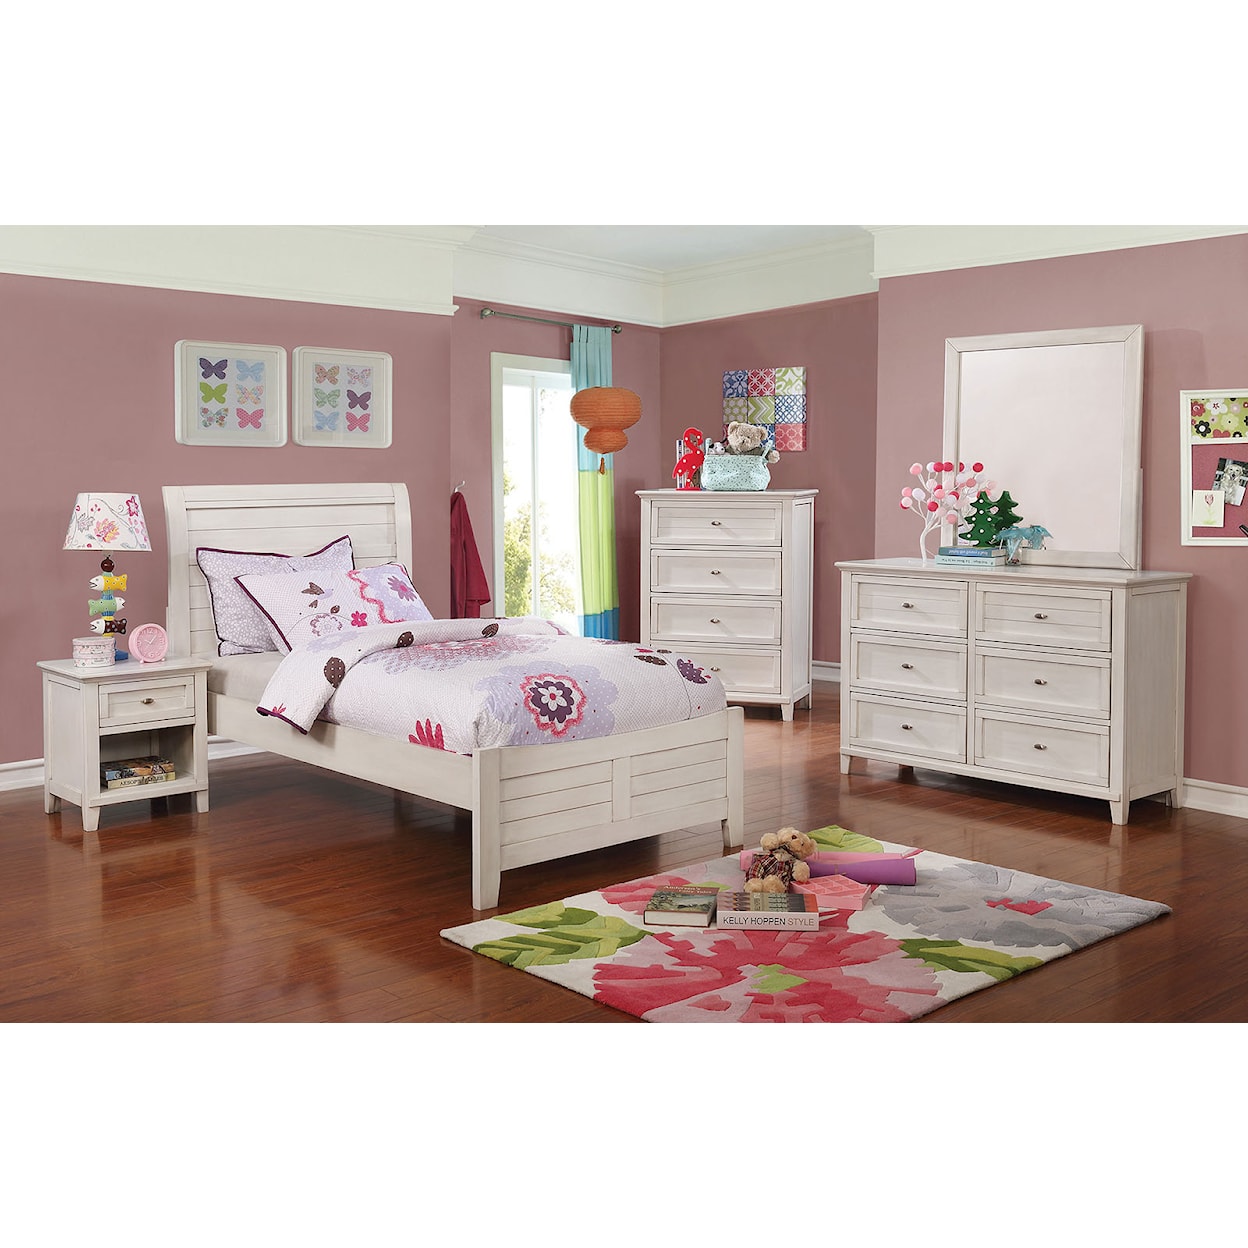 Furniture of America Brogan 4 Pc. Twin Bedroom Set